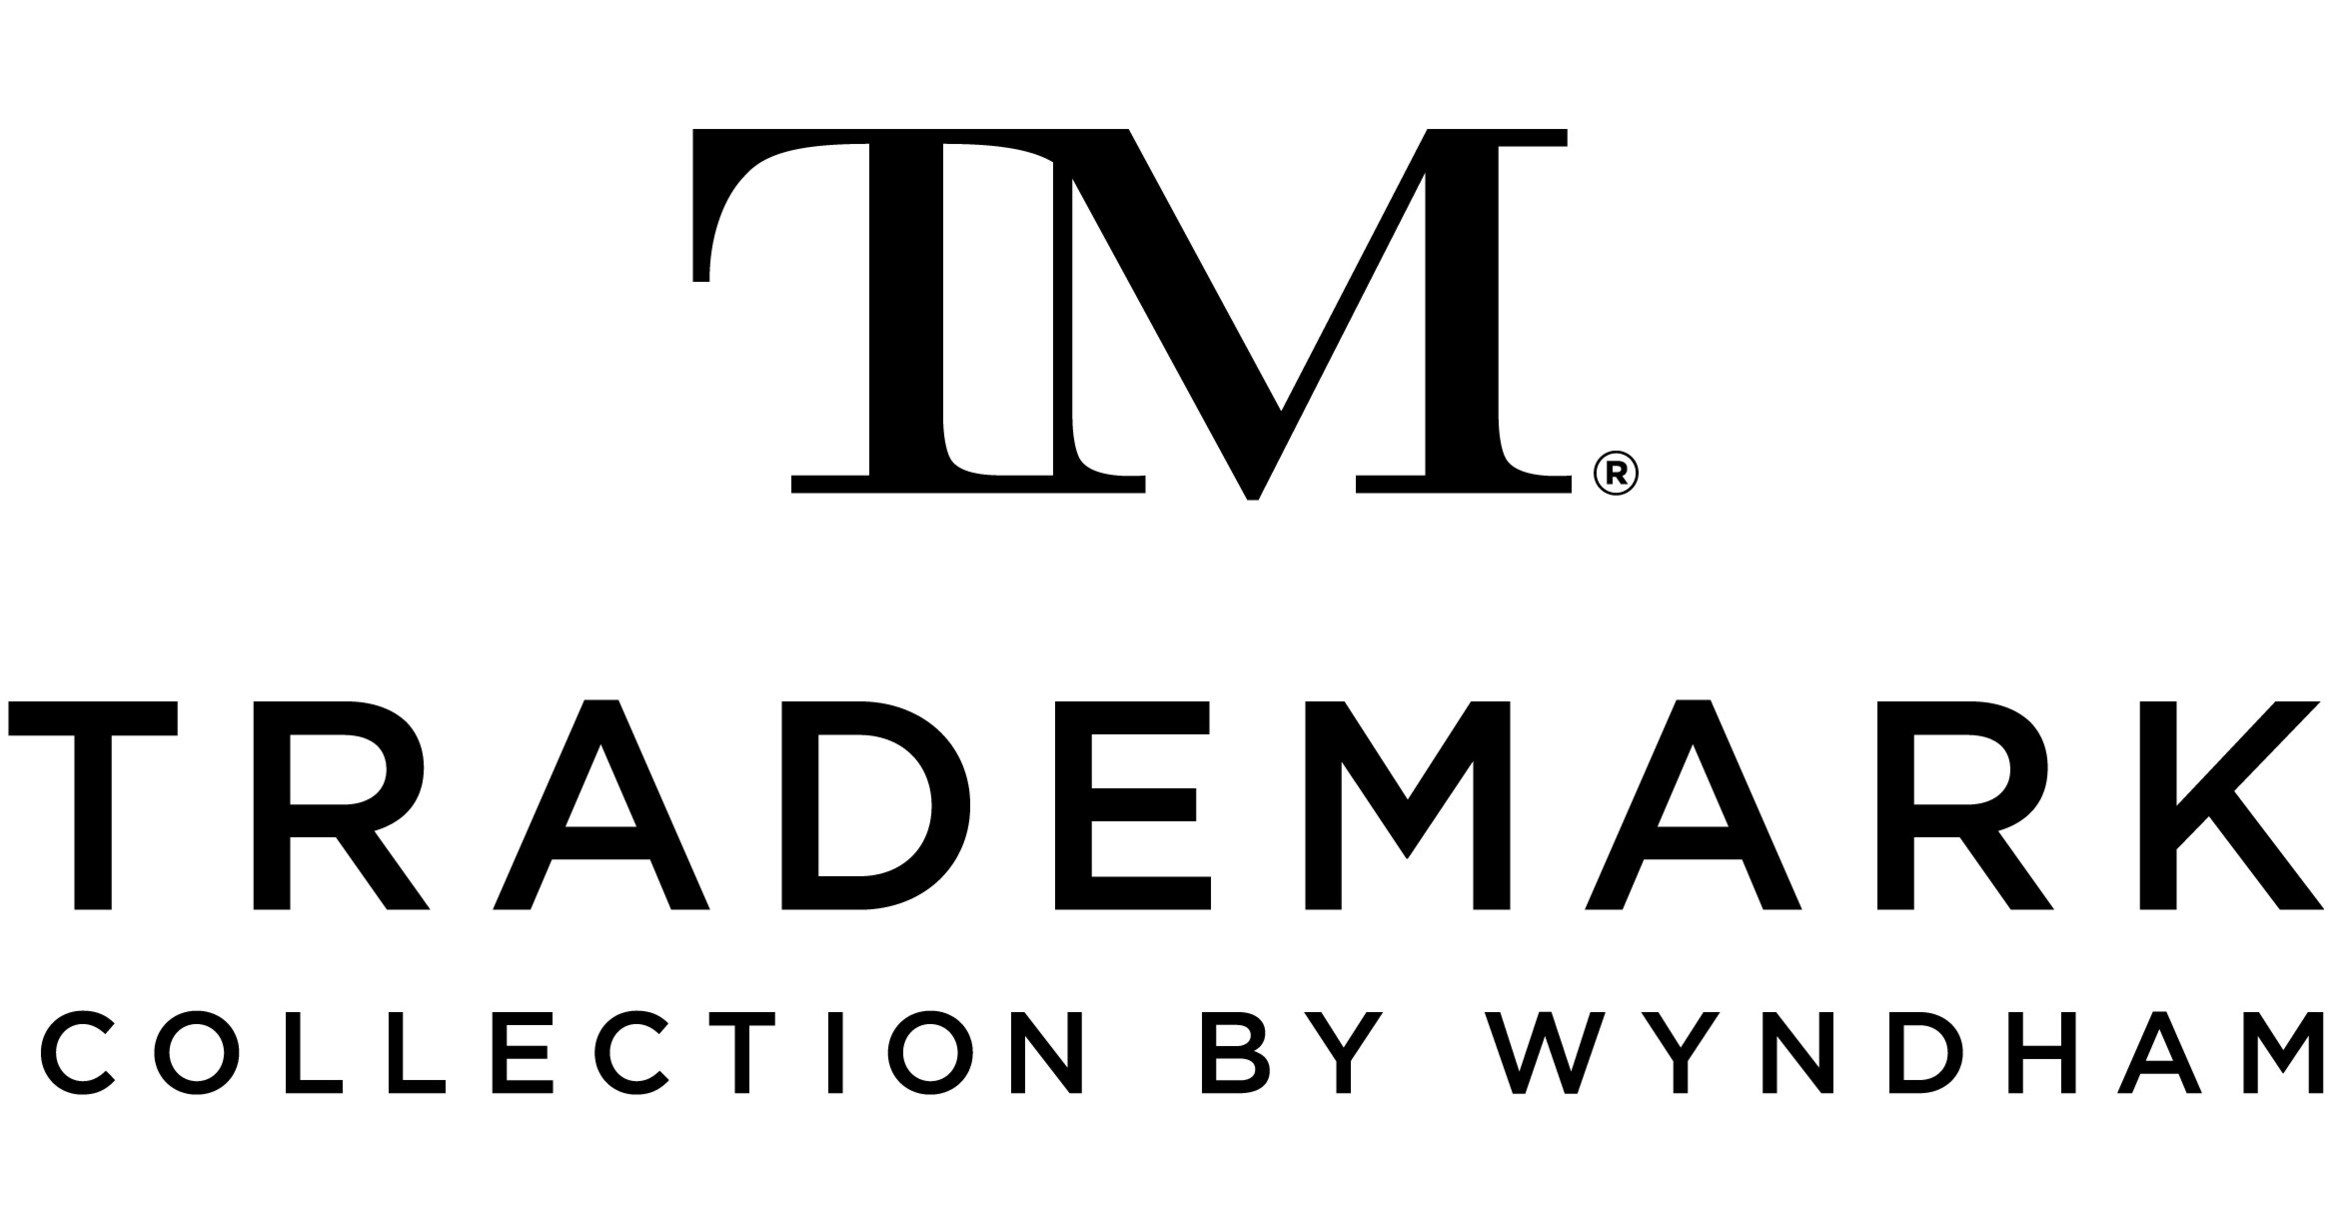 Trademark by Wyndham